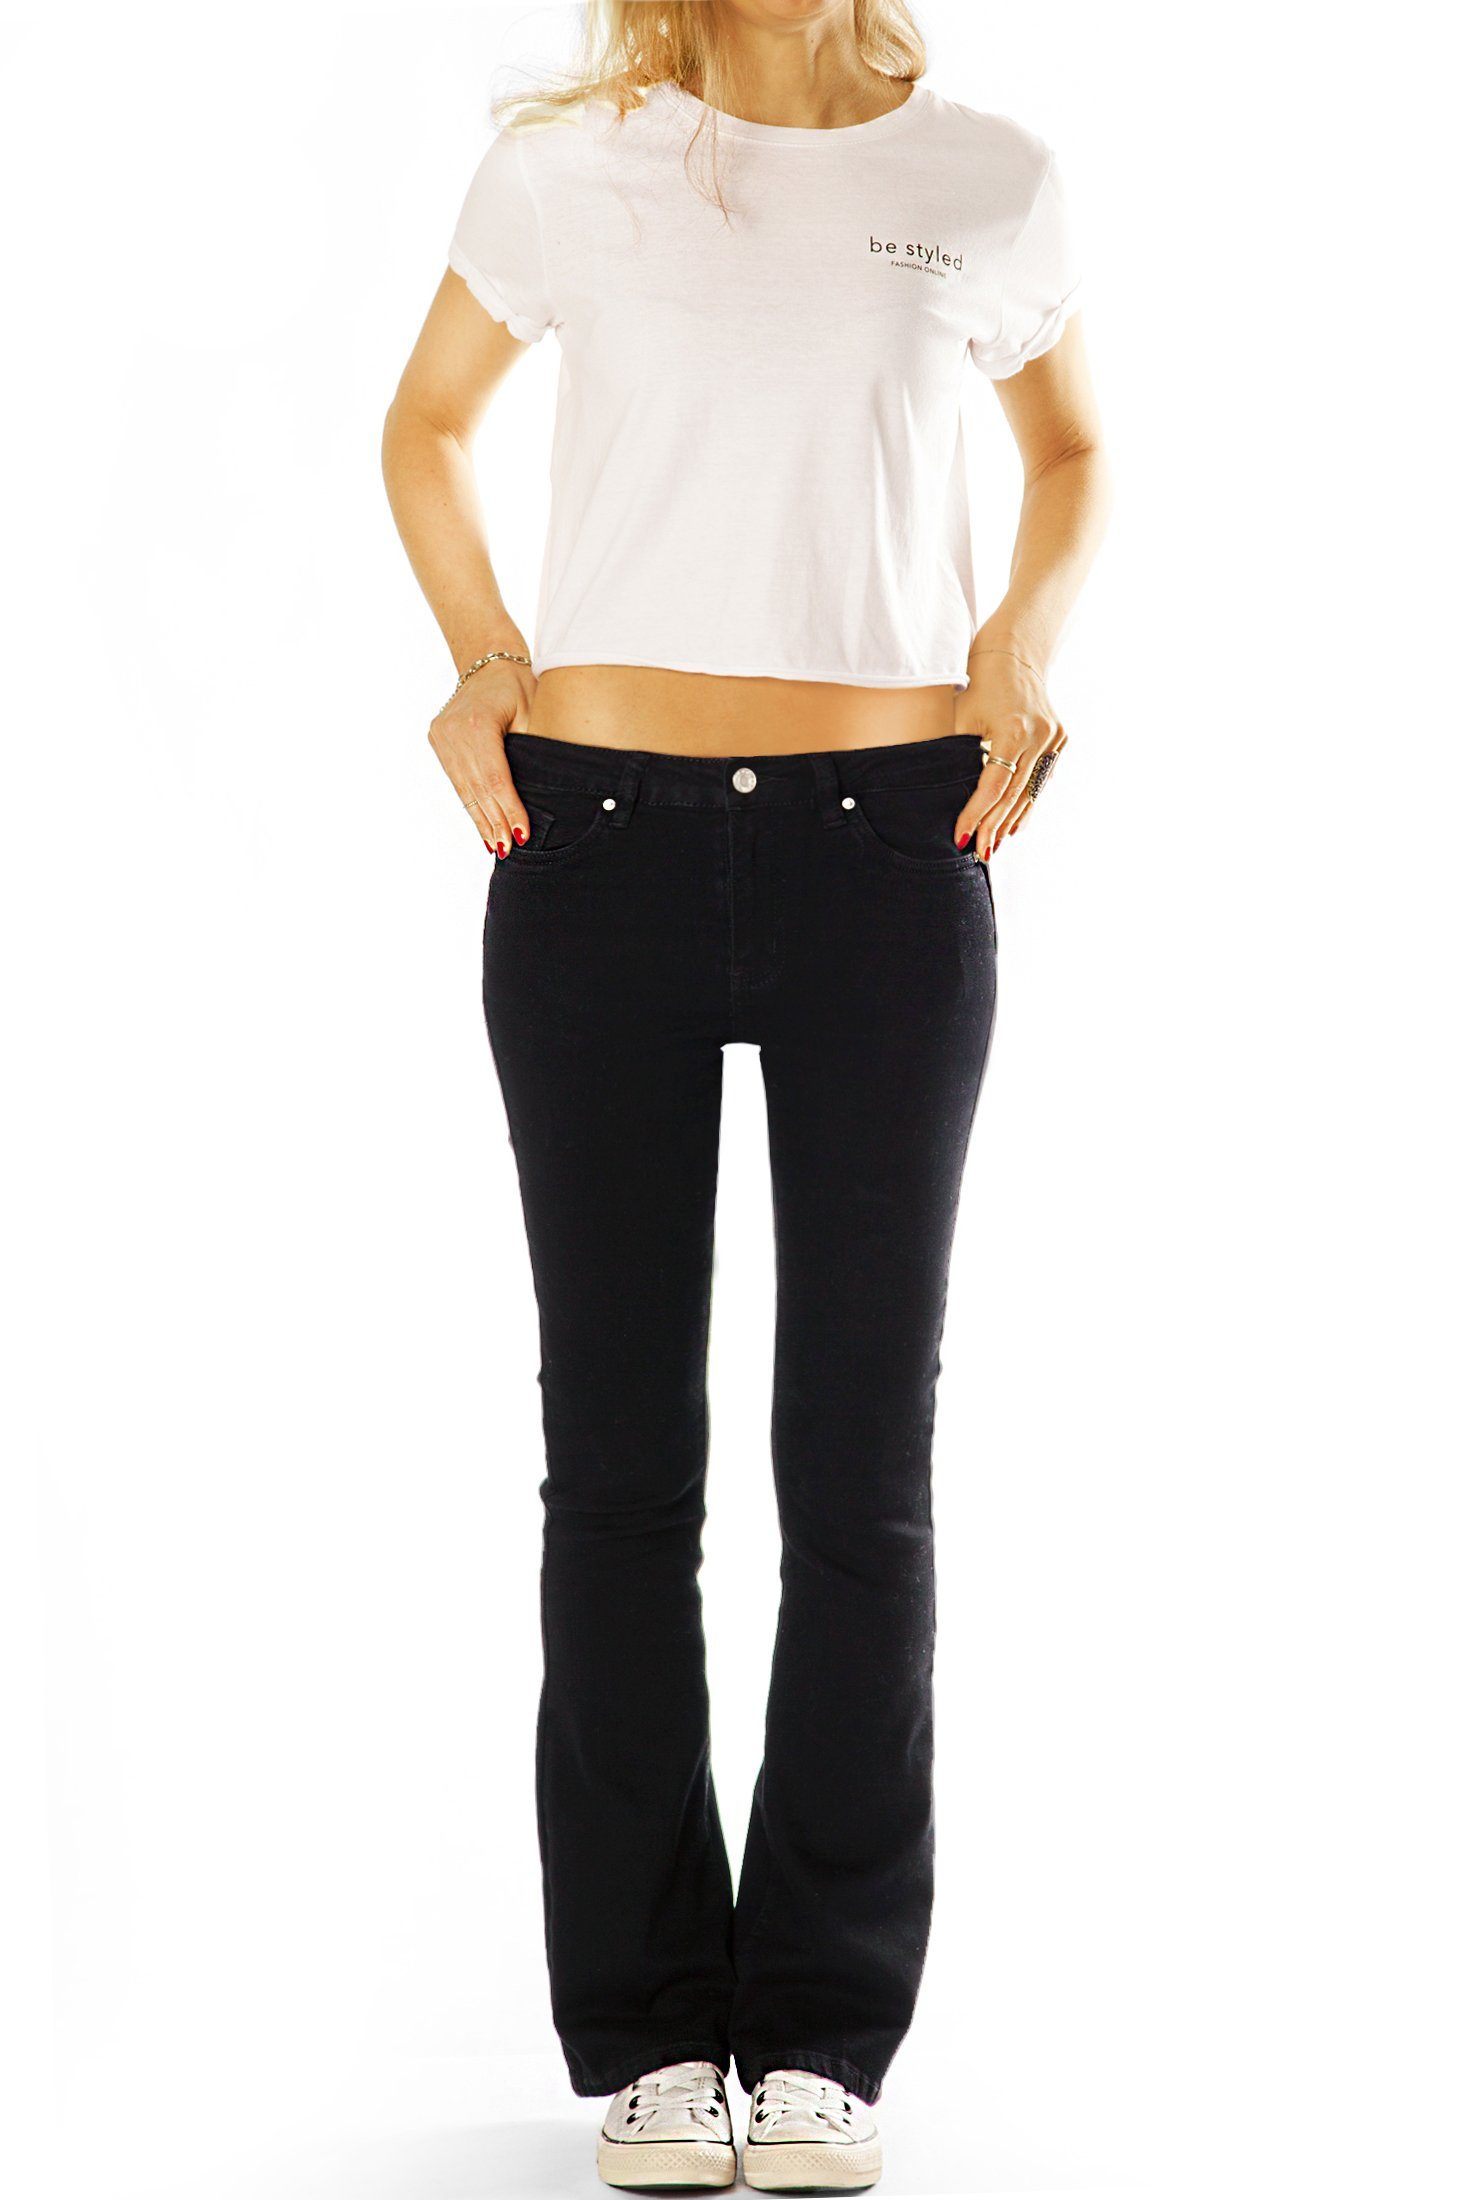 stretchig Hose Jeans Stretch-Anteil, medium waist, Medium im Bootcut-Jeans styled Schlag Basic Cut 5-Pocket-Style, j2L-1 bequem, Damen - Waist Boot mit be